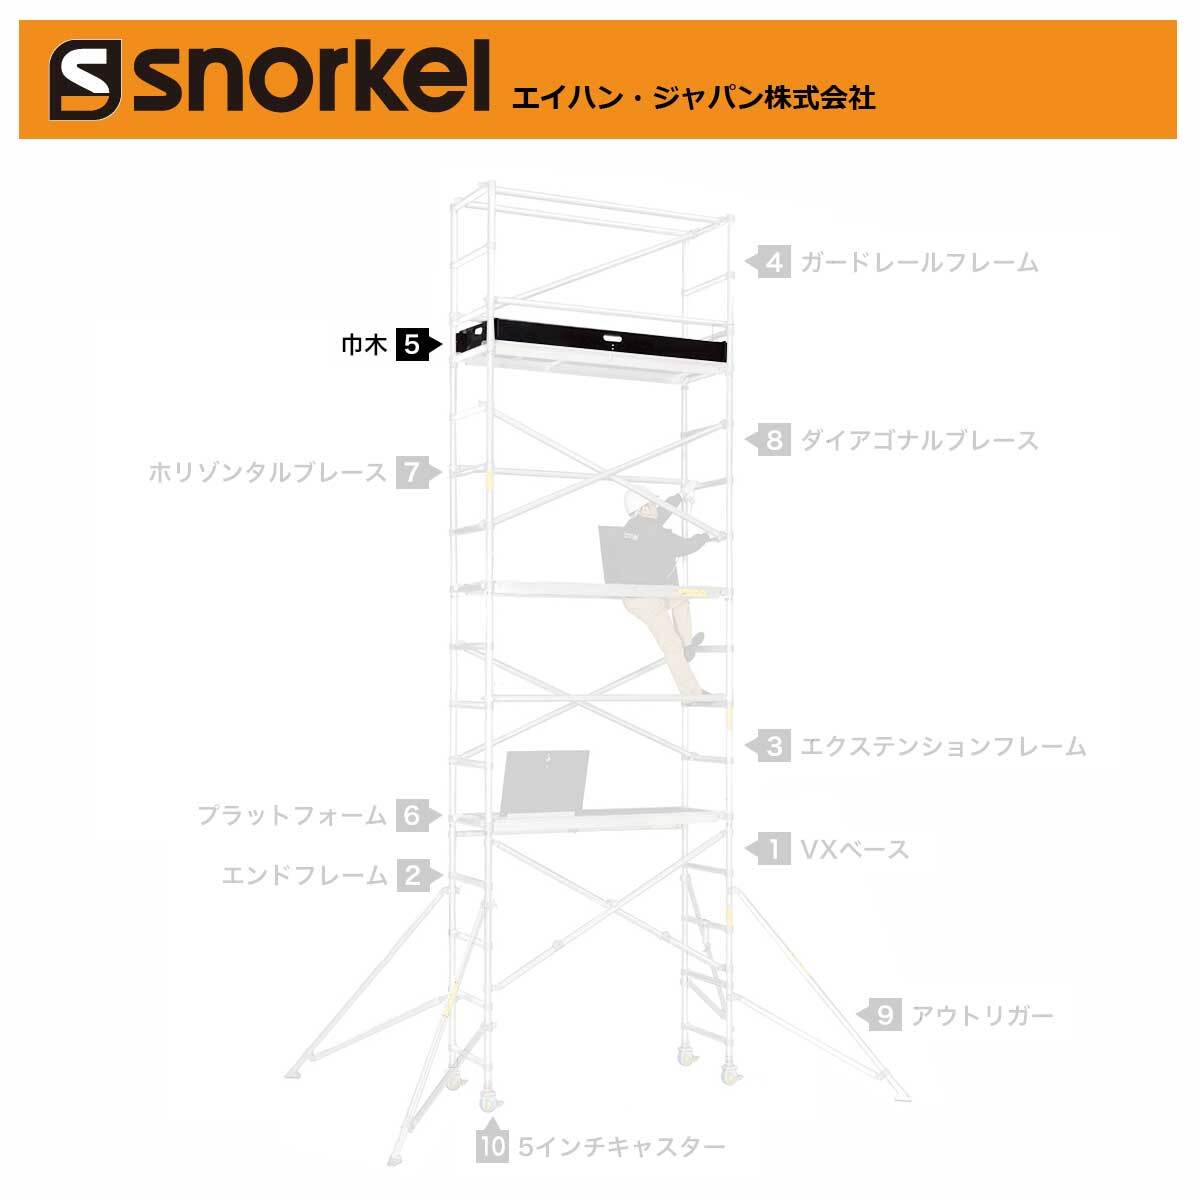  snorkel aluminium low кольцо tower часть материал одиночный товар ширина дерево 4FSW* дерево ( Hasegawa промышленность )